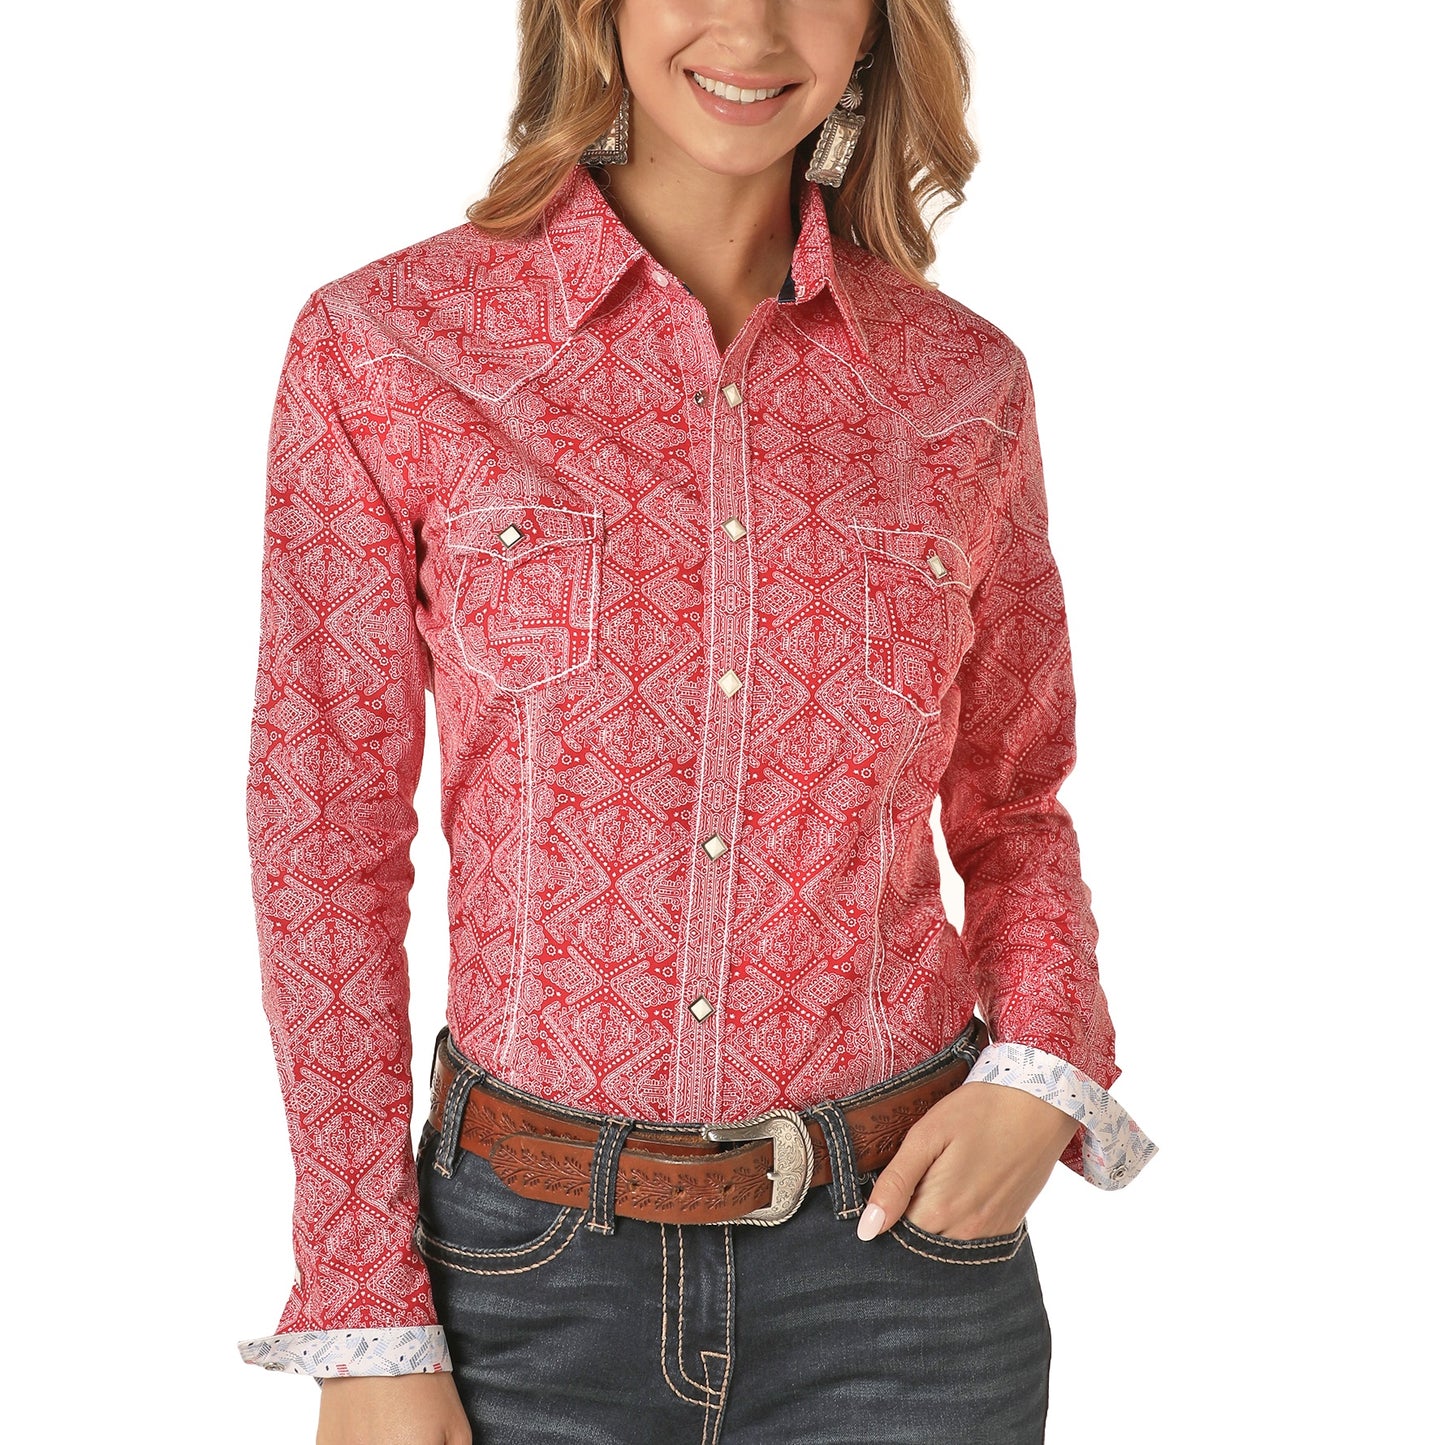 Panhandle Rough Stock Ladies Long Sleeve Diamond Print Shirt R4S8492